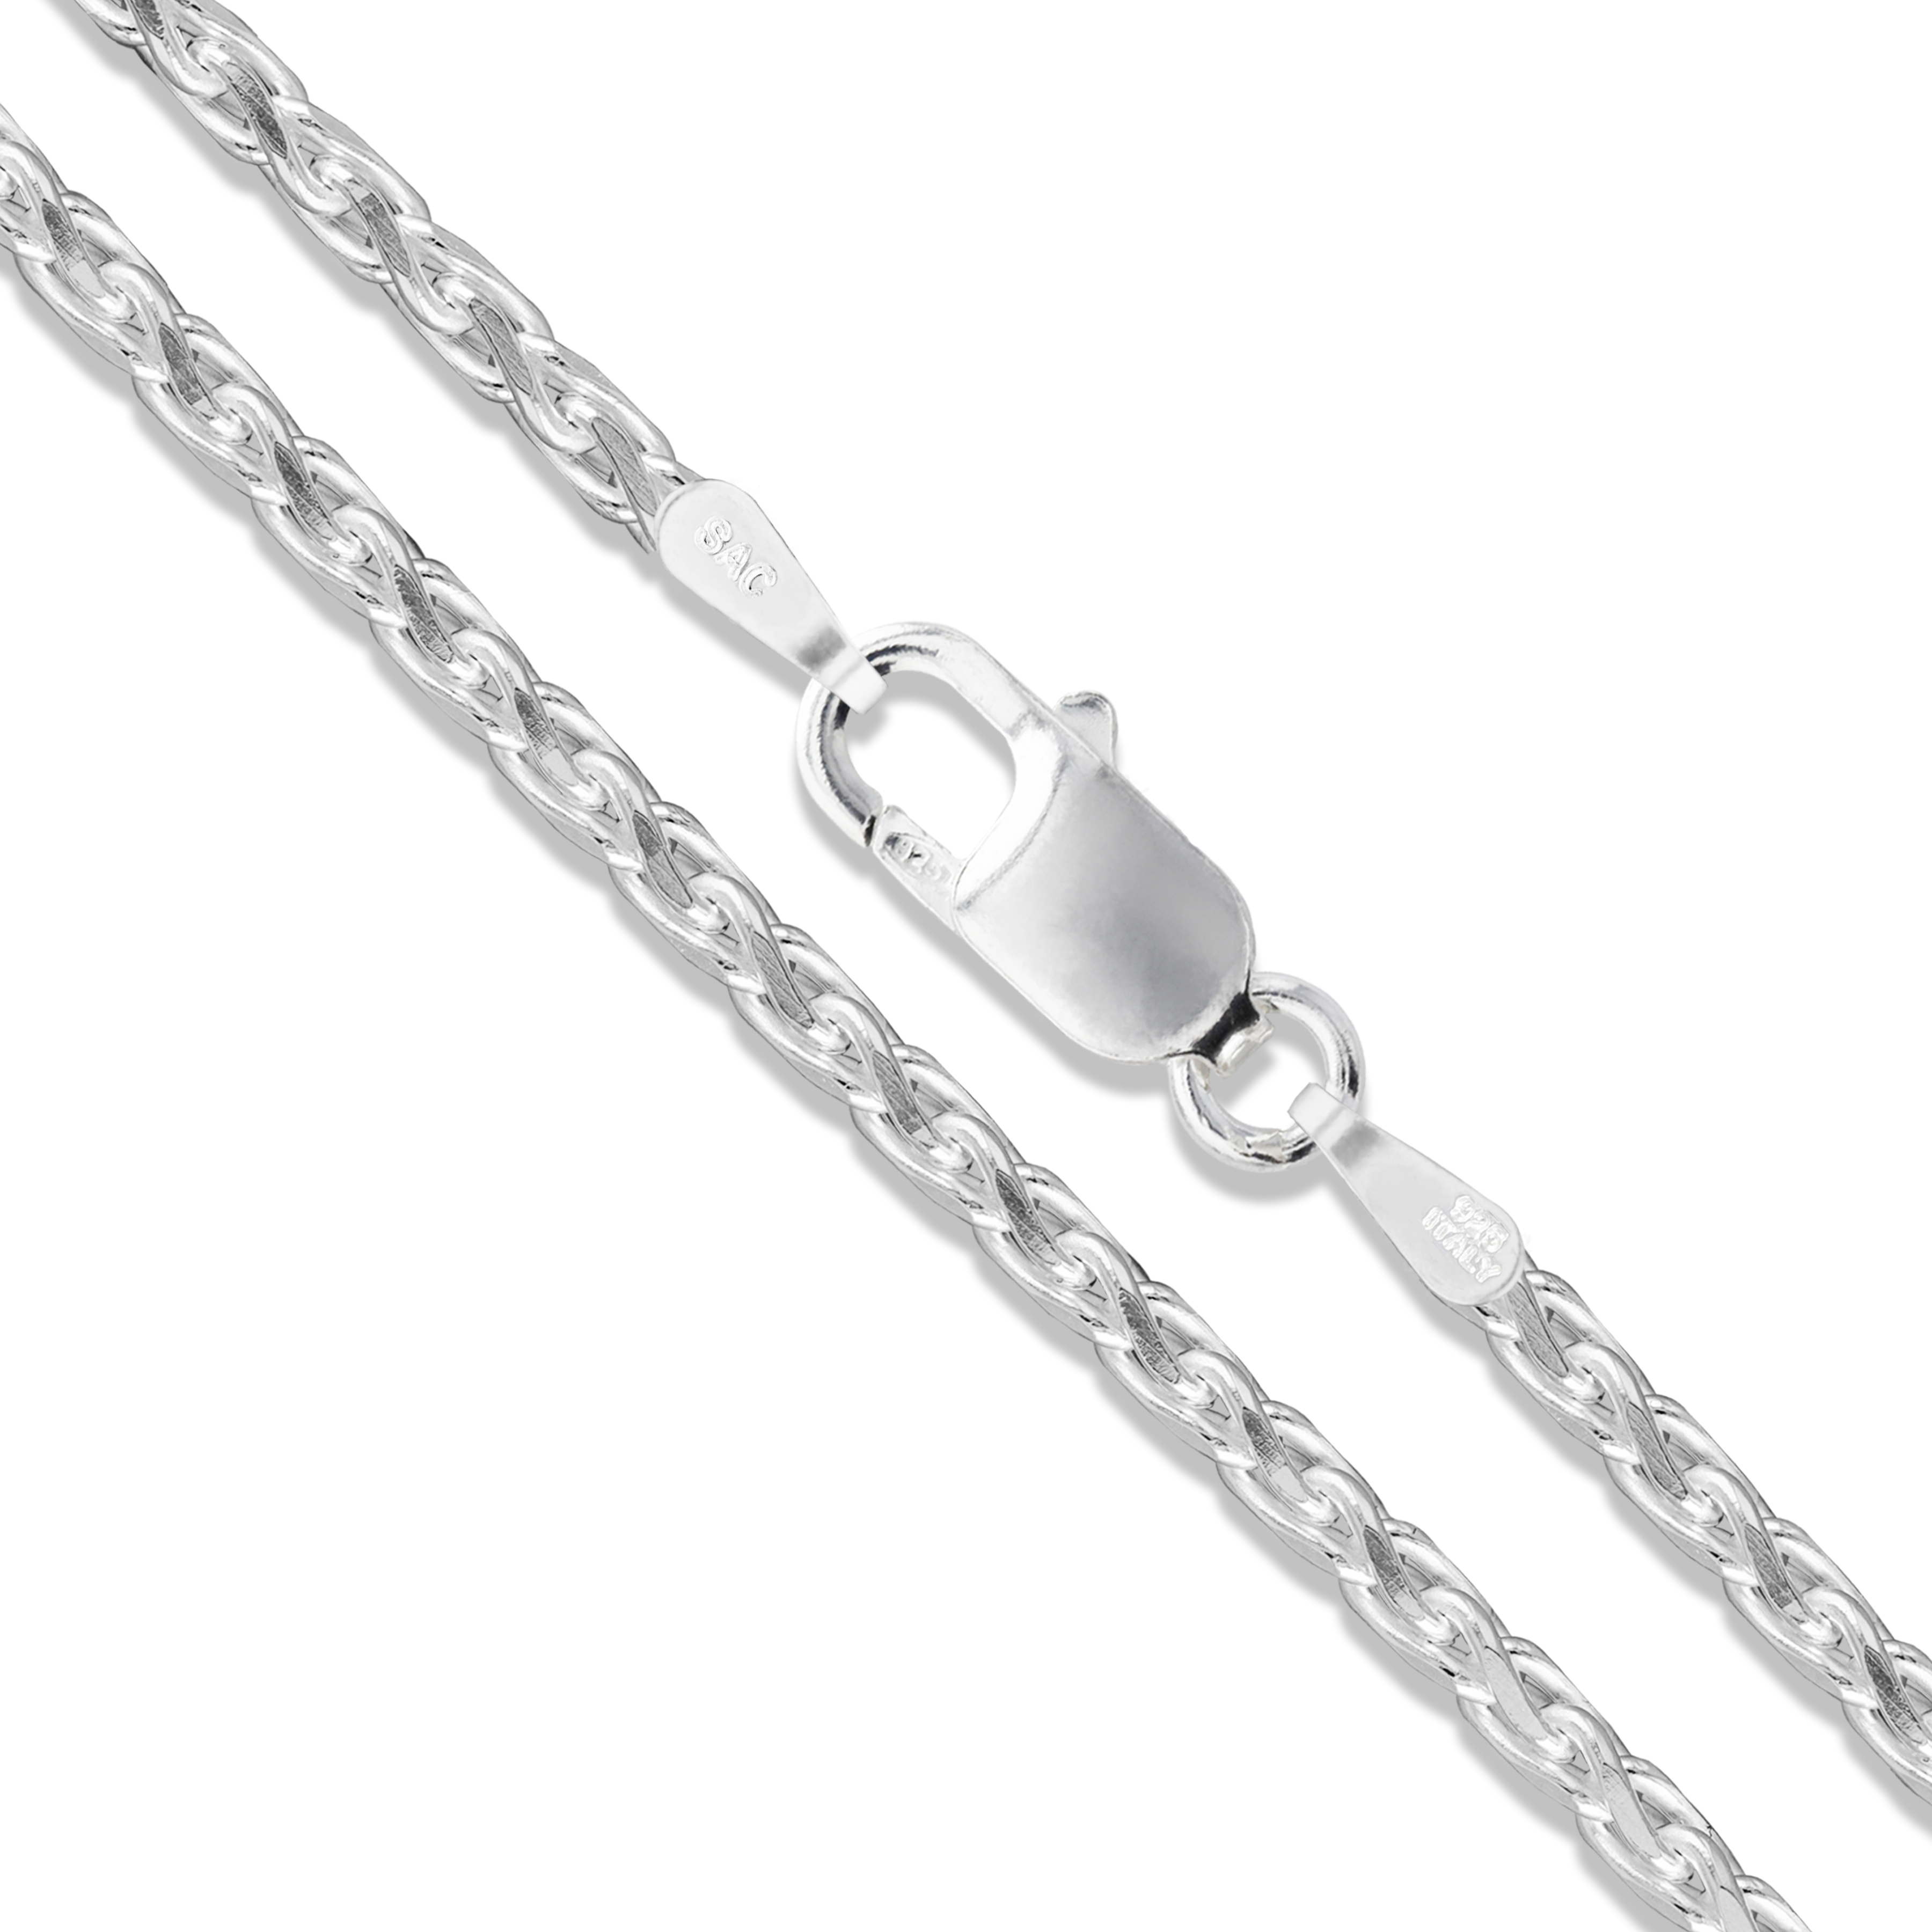 Buy 10 Pcs Bulk Silver Chains, Wholesale Chain, 925 Sterling